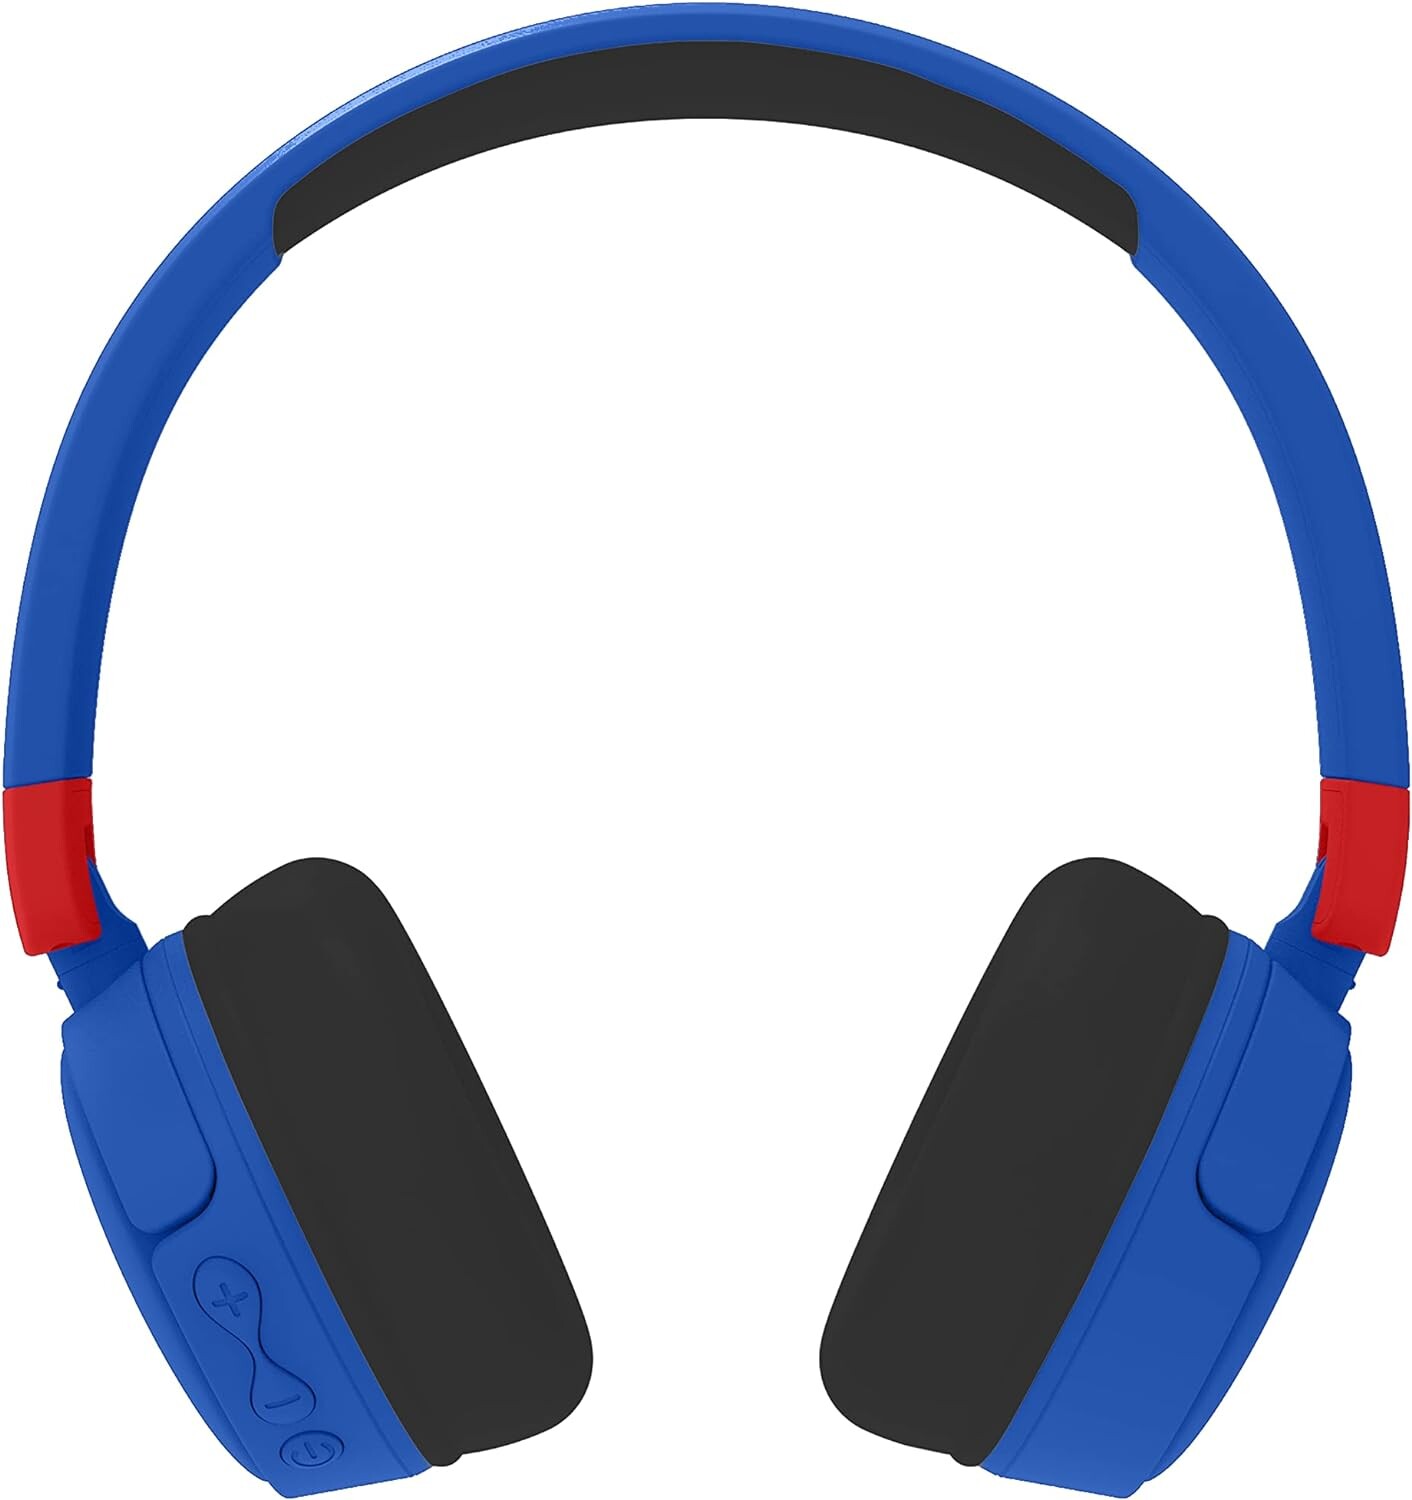 Casque audio - Achat casque audio, casque Usb au meilleur prix